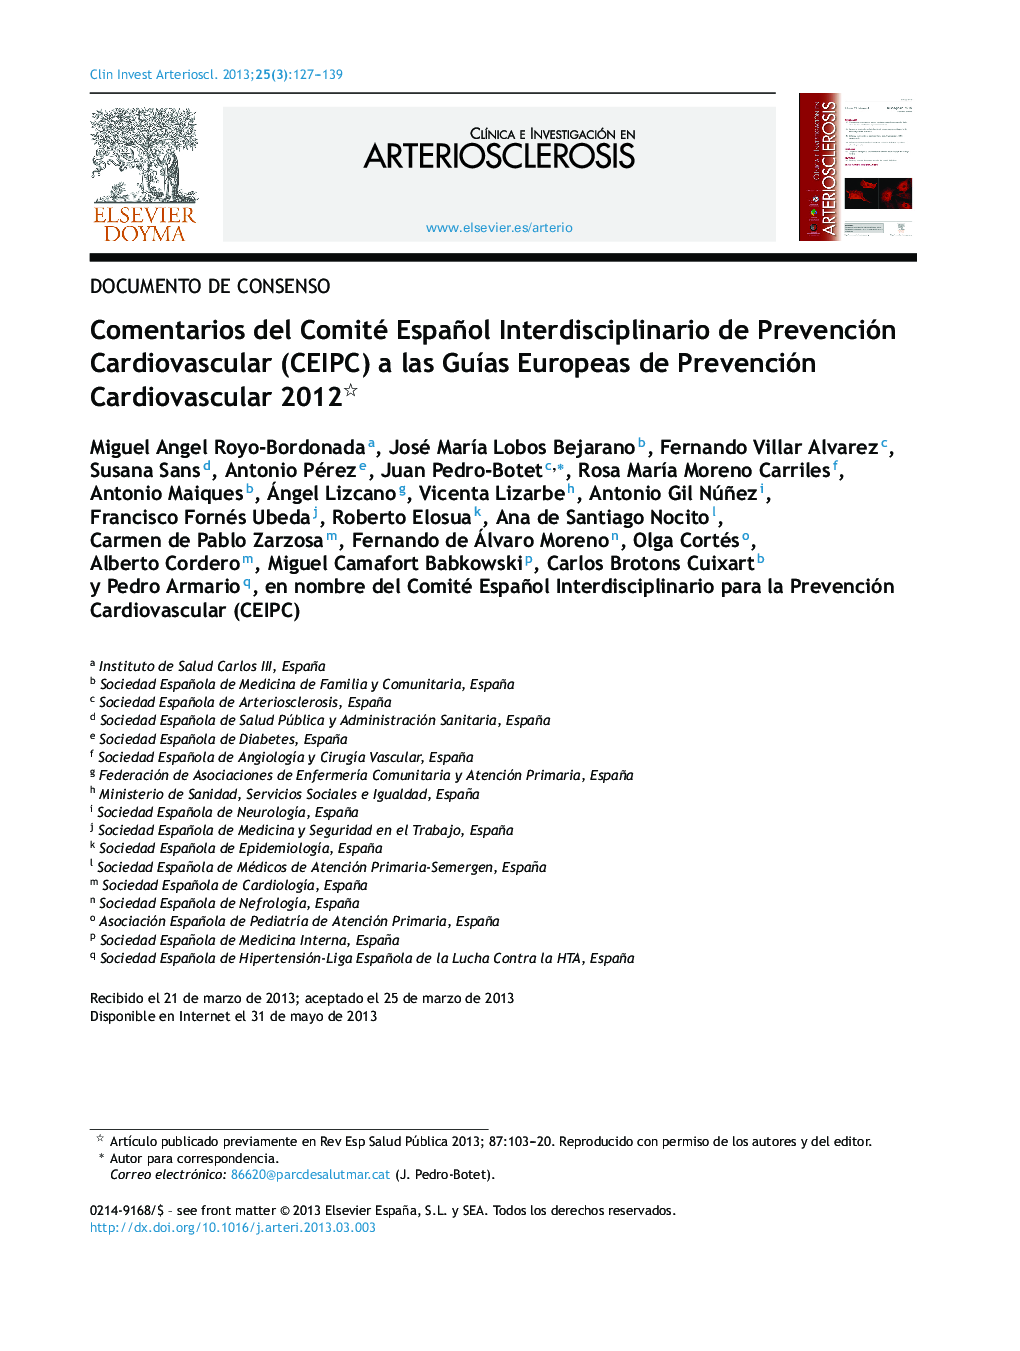 Comentarios del Comité Español Interdisciplinario de Prevención Cardiovascular (CEIPC) a las Guías Europeas de Prevención Cardiovascular 2012 